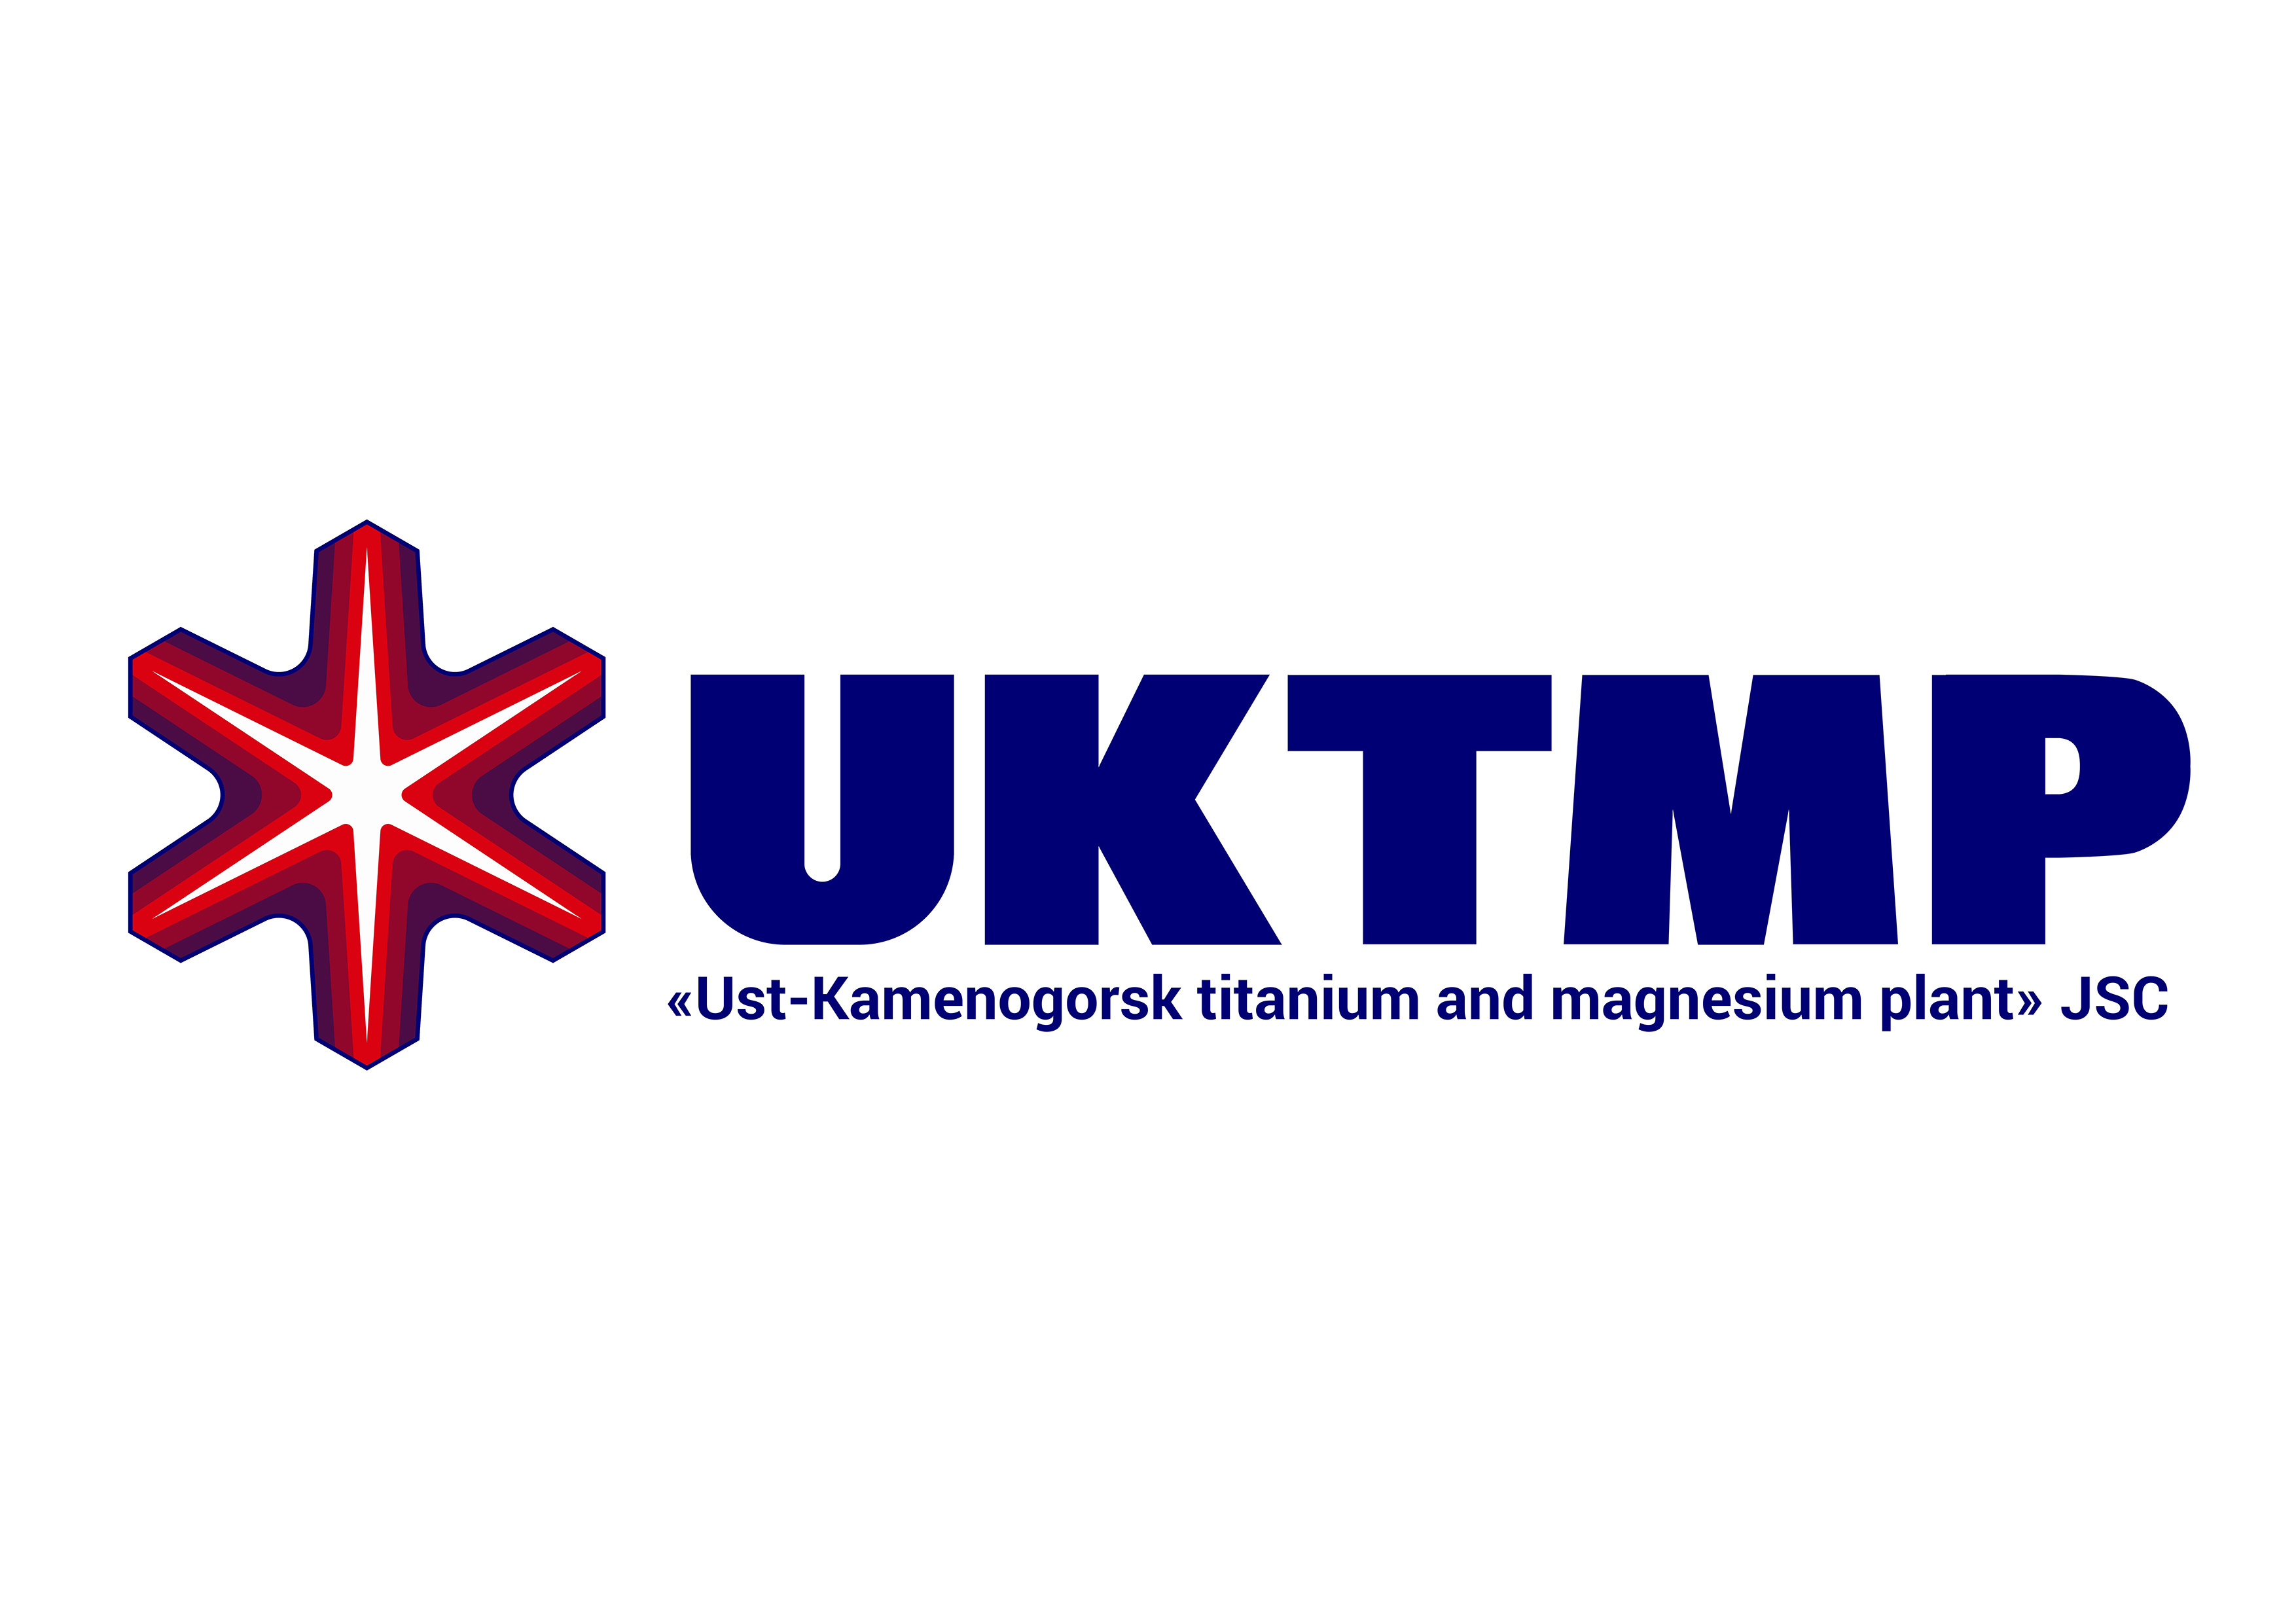 SHAREHOLDERS OF UST-KAMENOGORSK TITANIUM AND MAGNESIUM PLAN JSC, PLEASE NOTE!